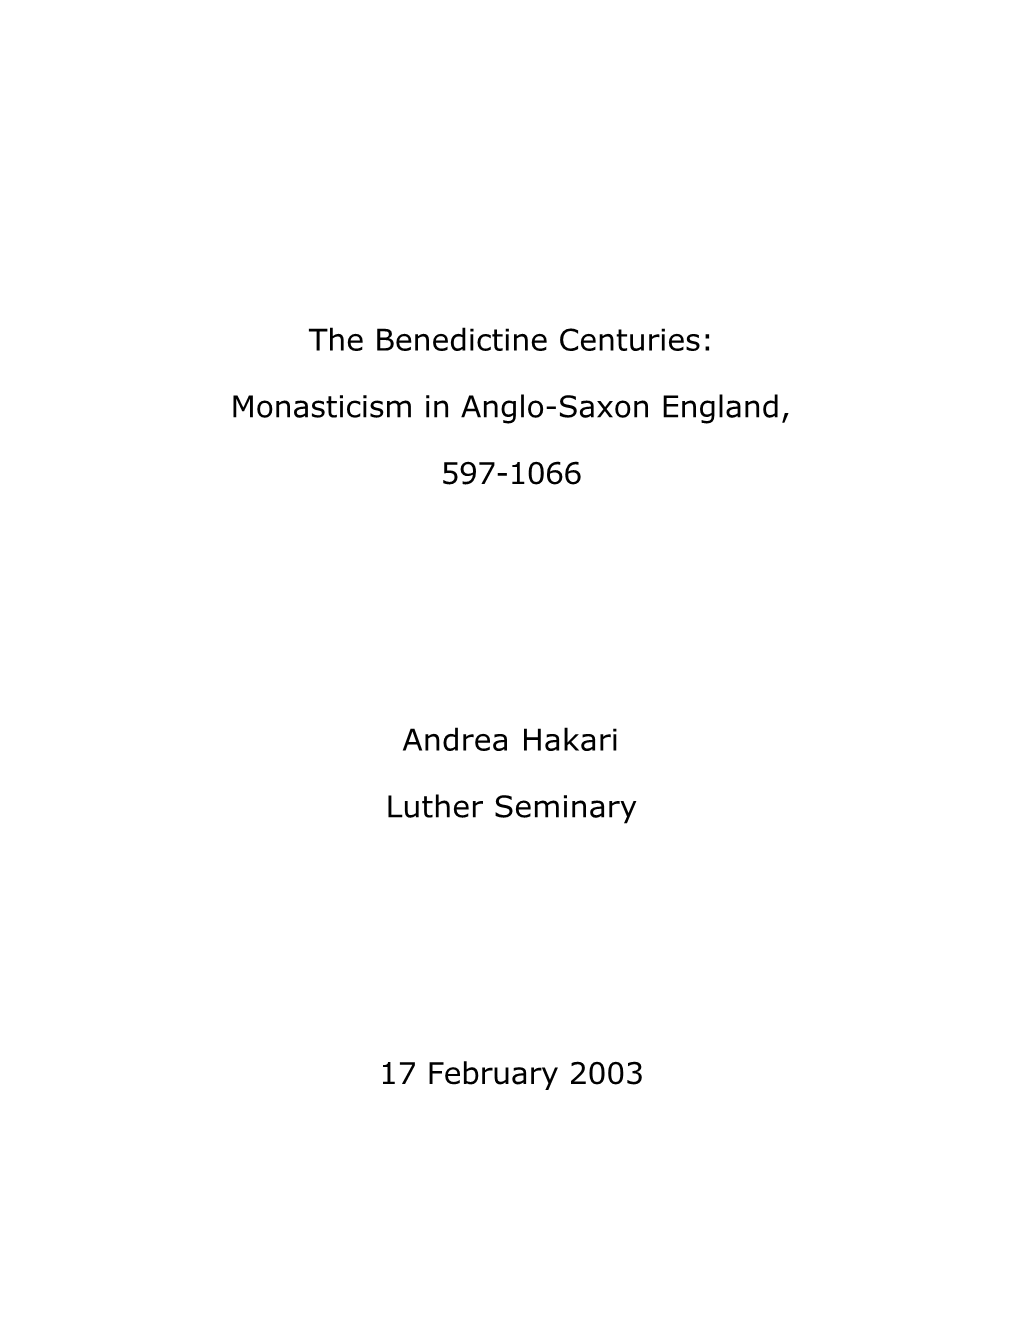 The Benedictine Centuries: Monasticism in Anglo-Saxon